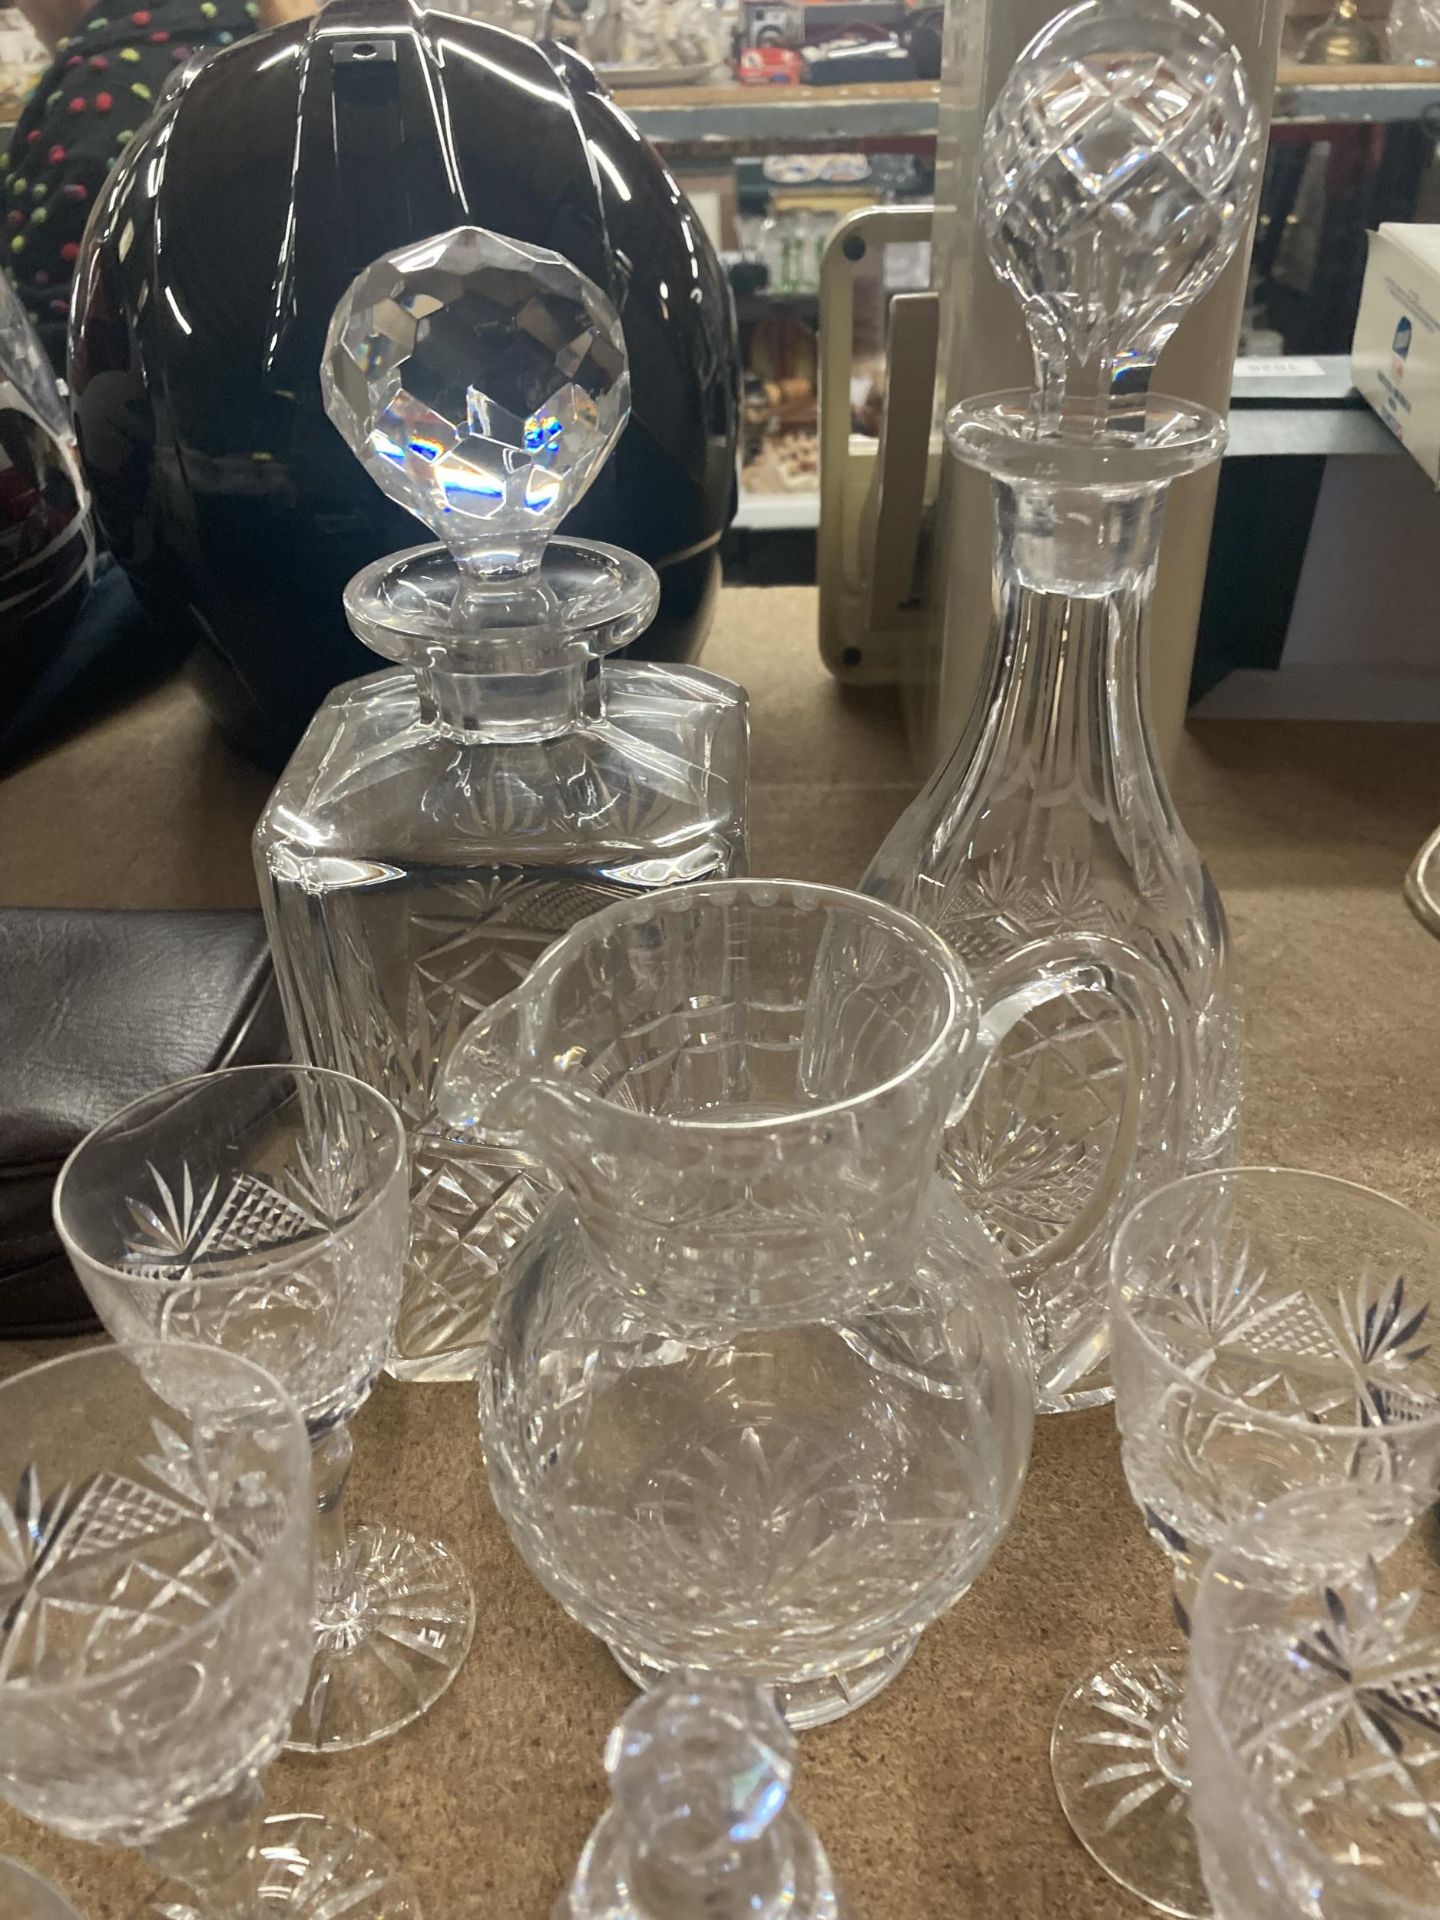 A QUANTITY OF GLASSWARE TO INCLUDE DECANTERS, A JUG, SHERRY AND LICQUOR GLASSES, ETC - Bild 2 aus 5